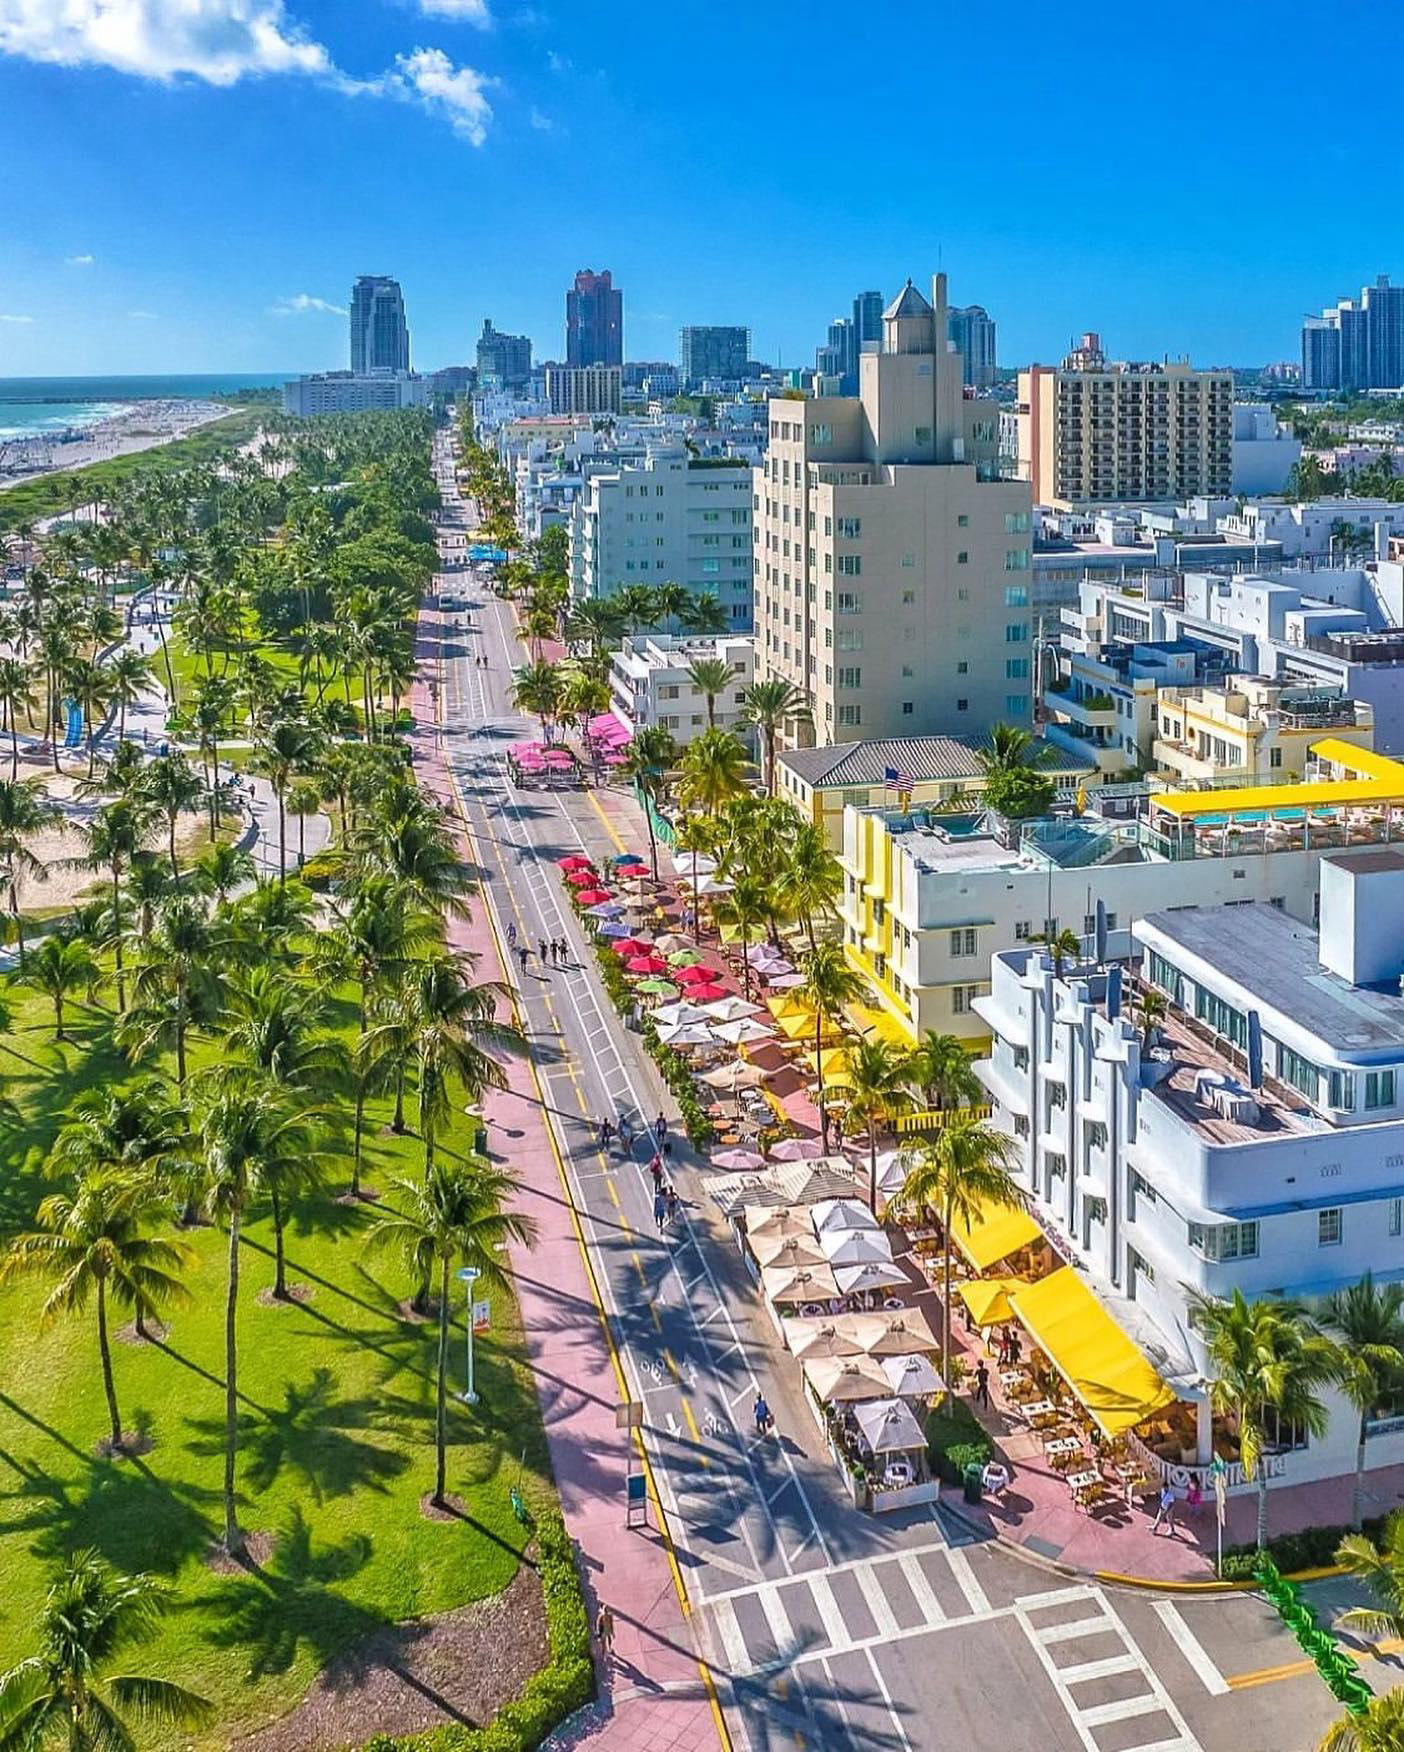 Miami Beach Life - Have a Wonderful Day Everyone